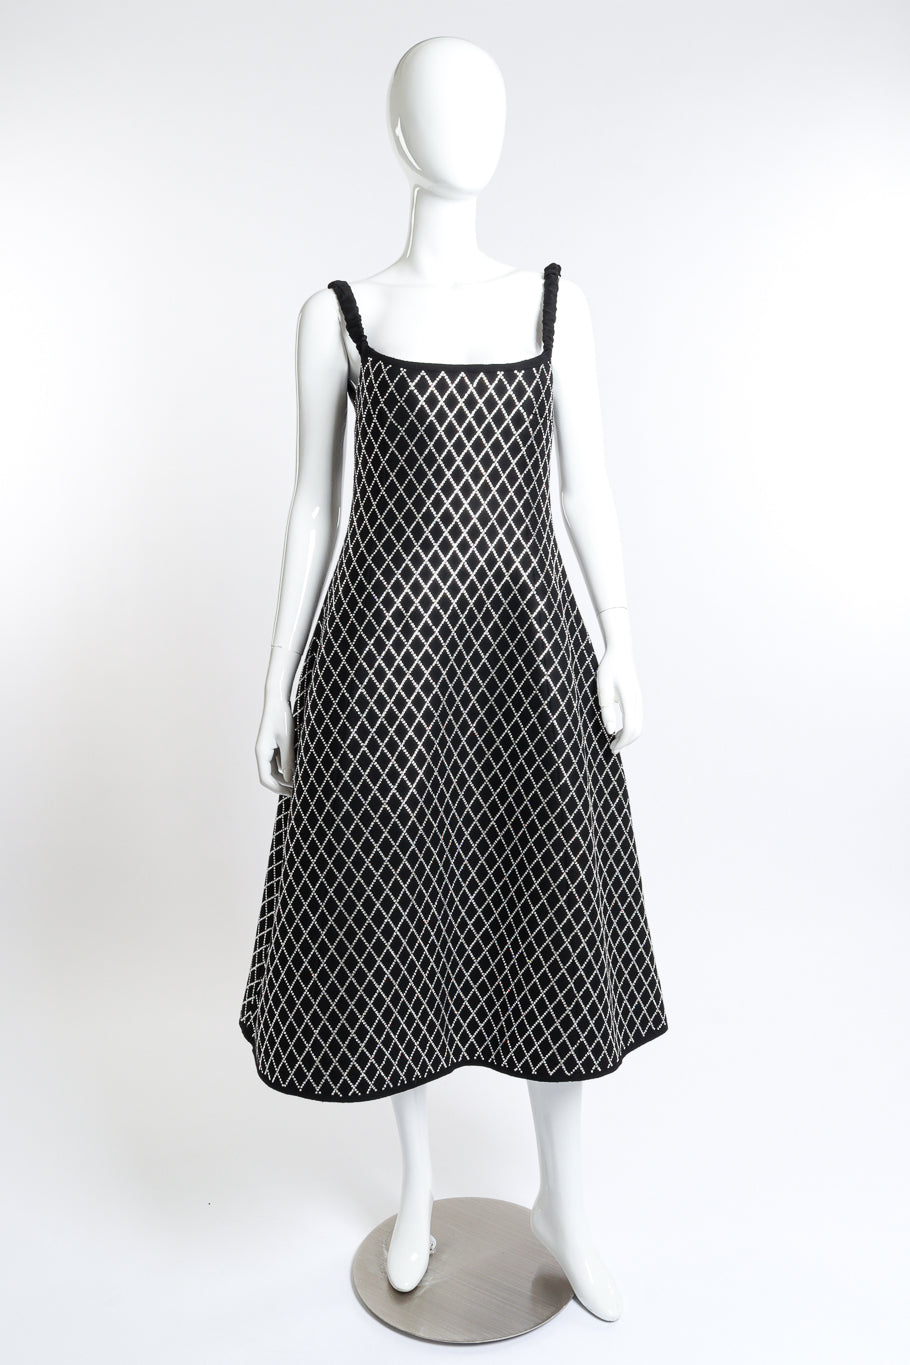 Khaite Diamond Crystal Studded Midi Dress front on mannequin @recess la